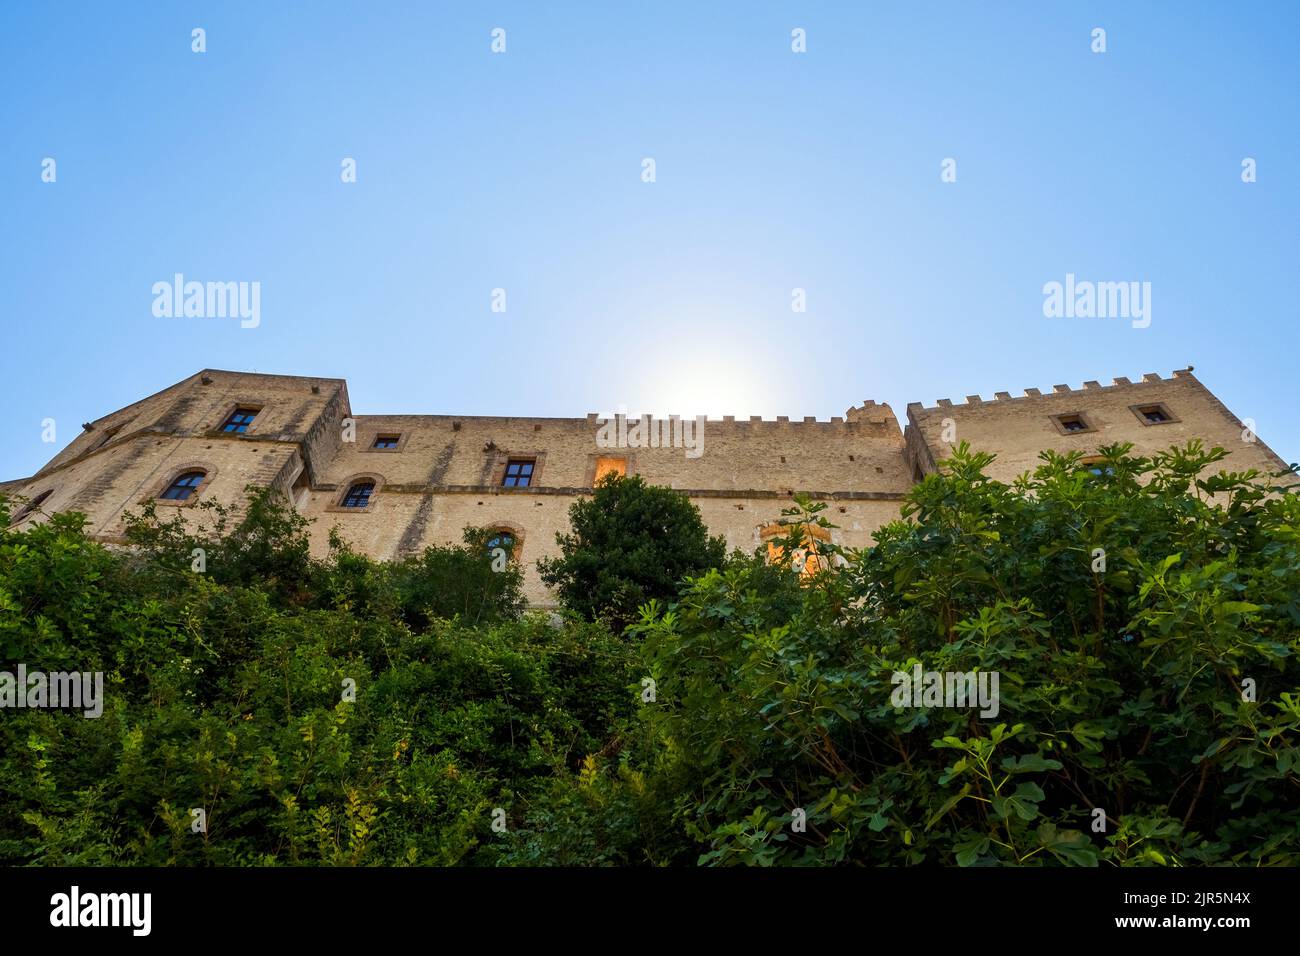 Medieval town of Rocca Sinibalda - Rieti, Italy Stock Photo